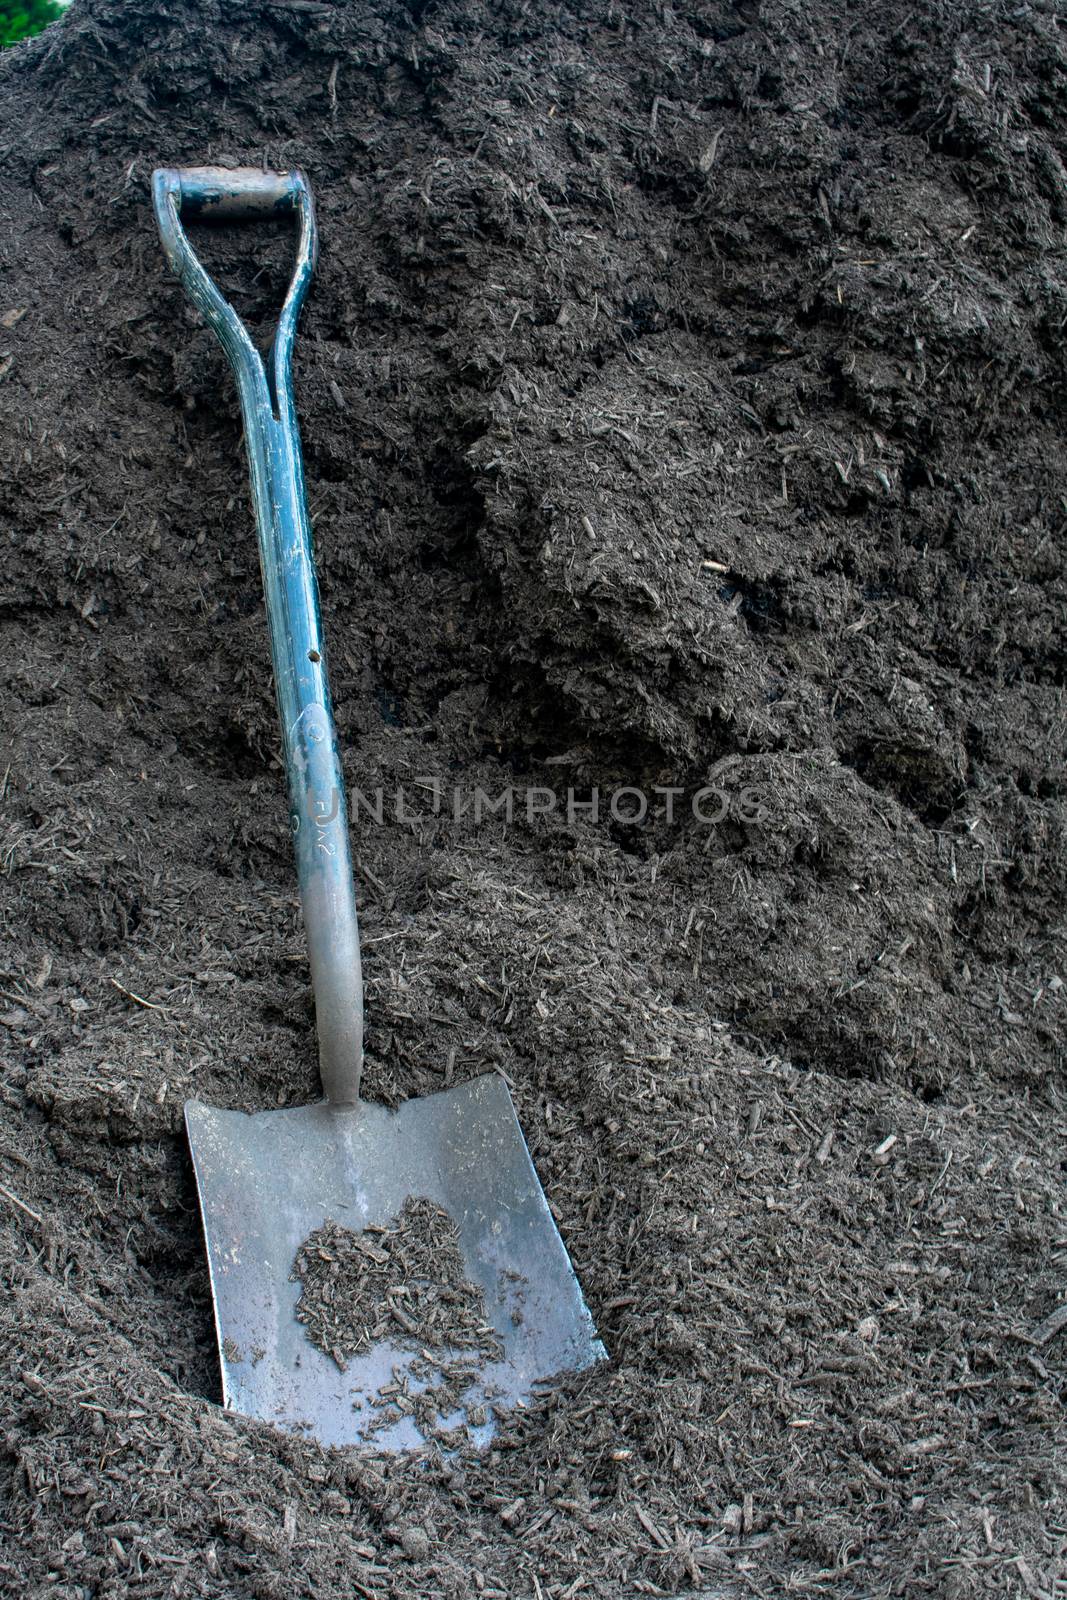 A Metal Gardening Shovel in a Large Pile of Black Mulch